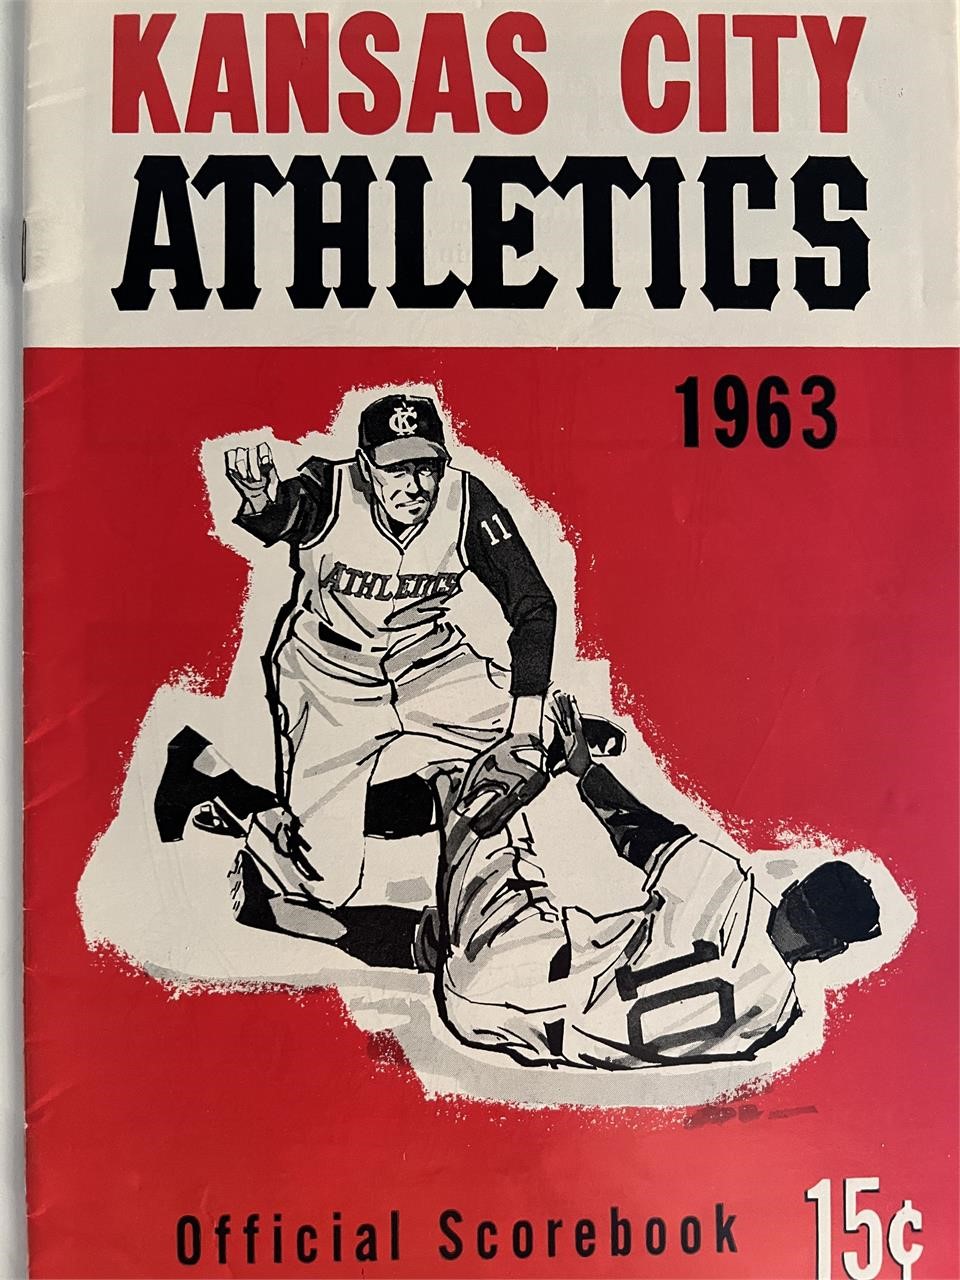 1963 Kansas City Athletics Scorebook. 7x10 inches